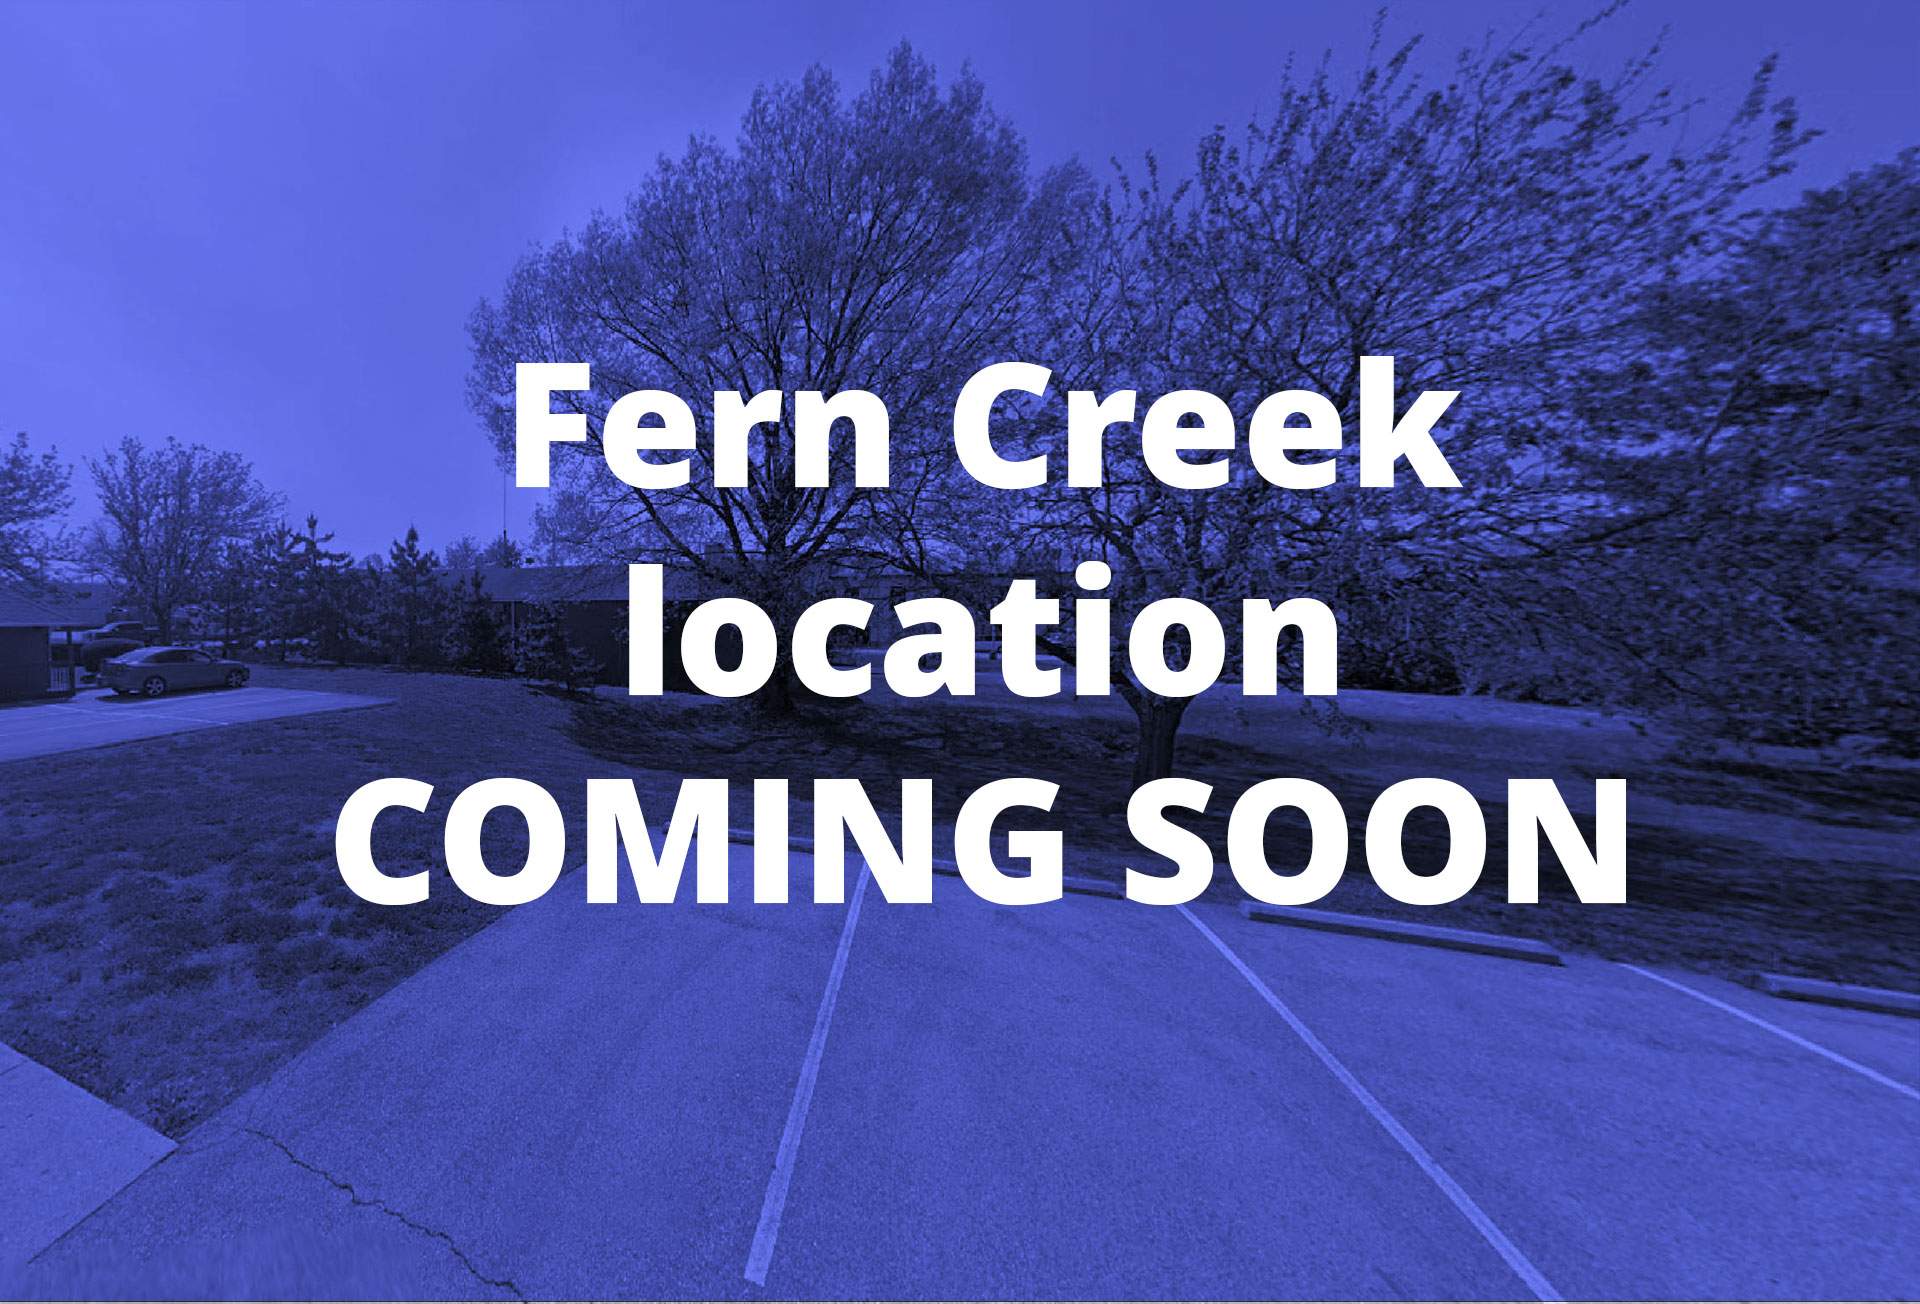 Fern Creek location coming soon